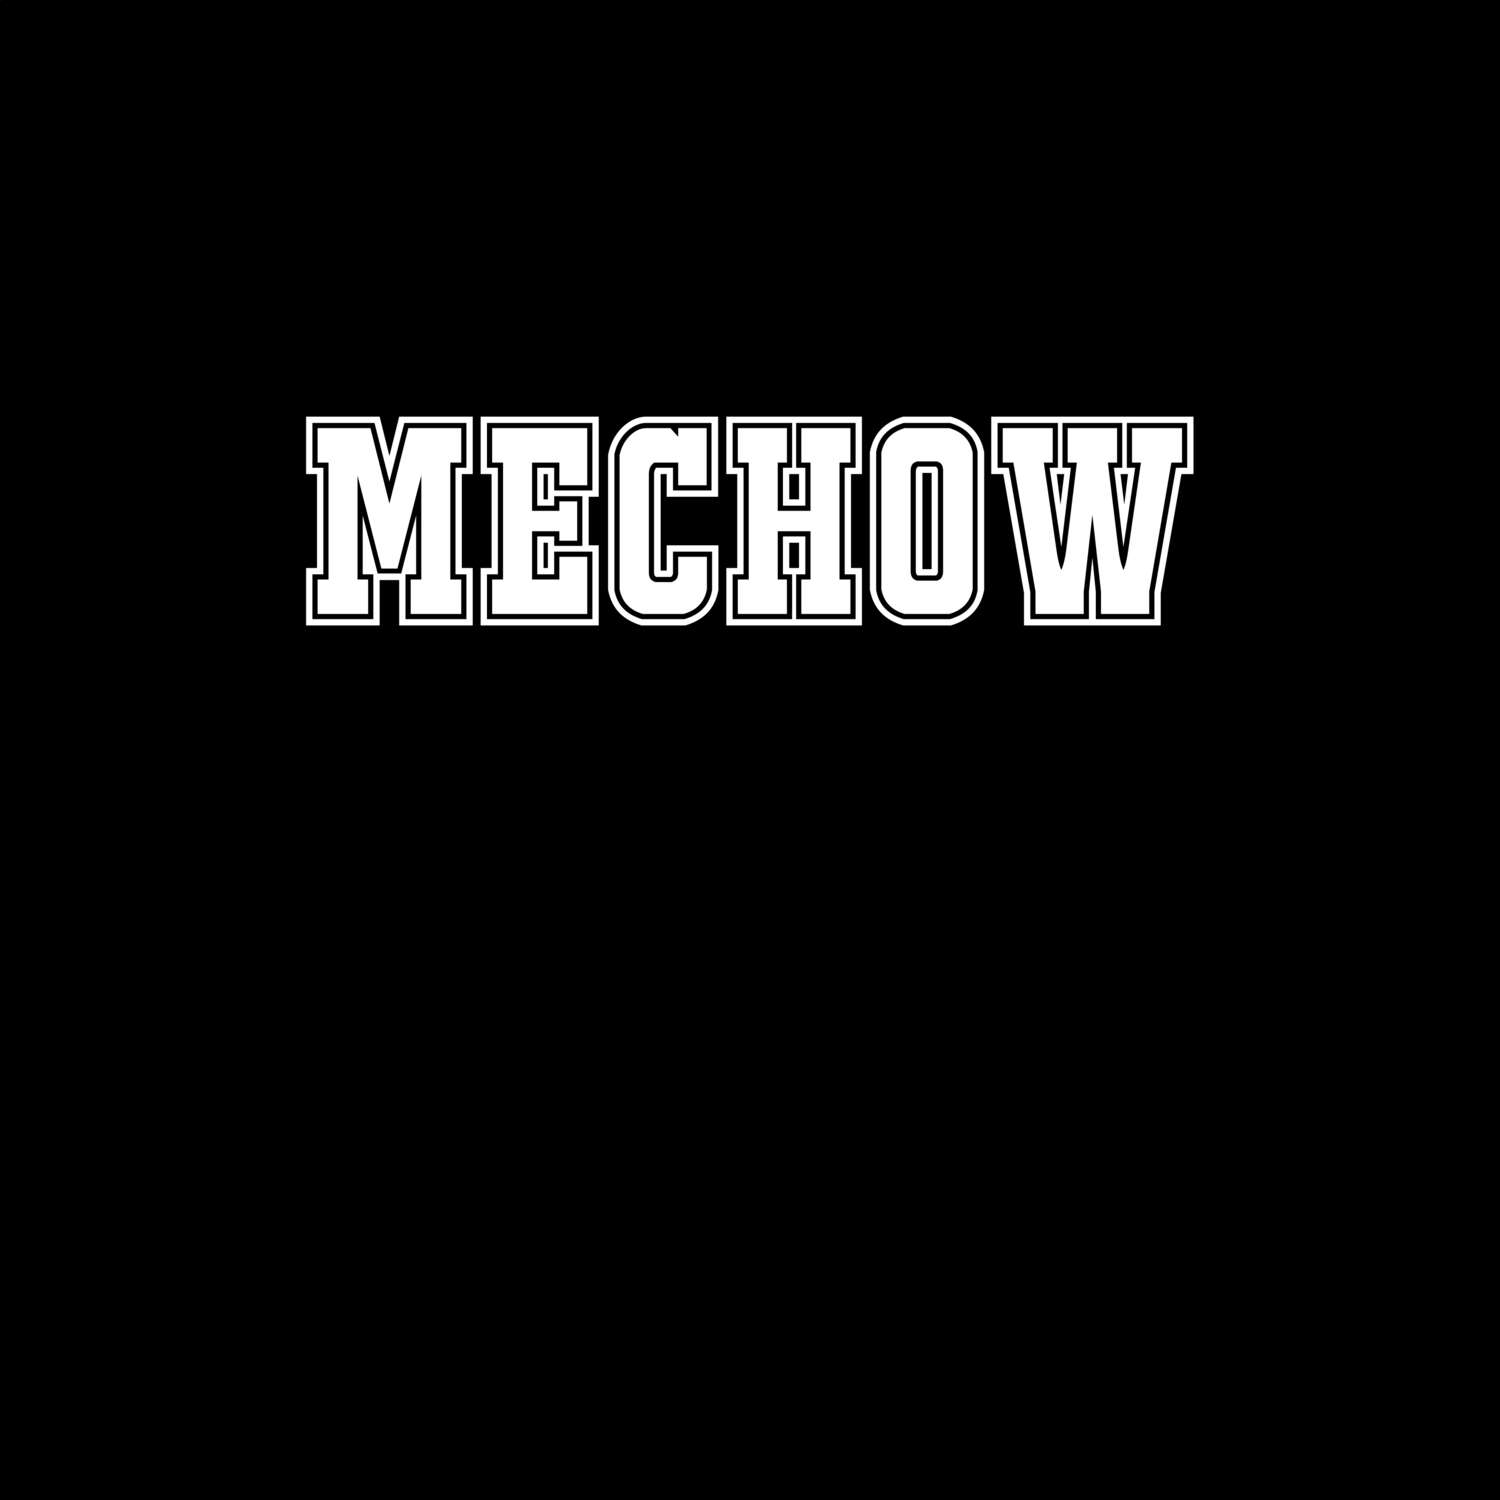 Mechow T-Shirt »Classic«